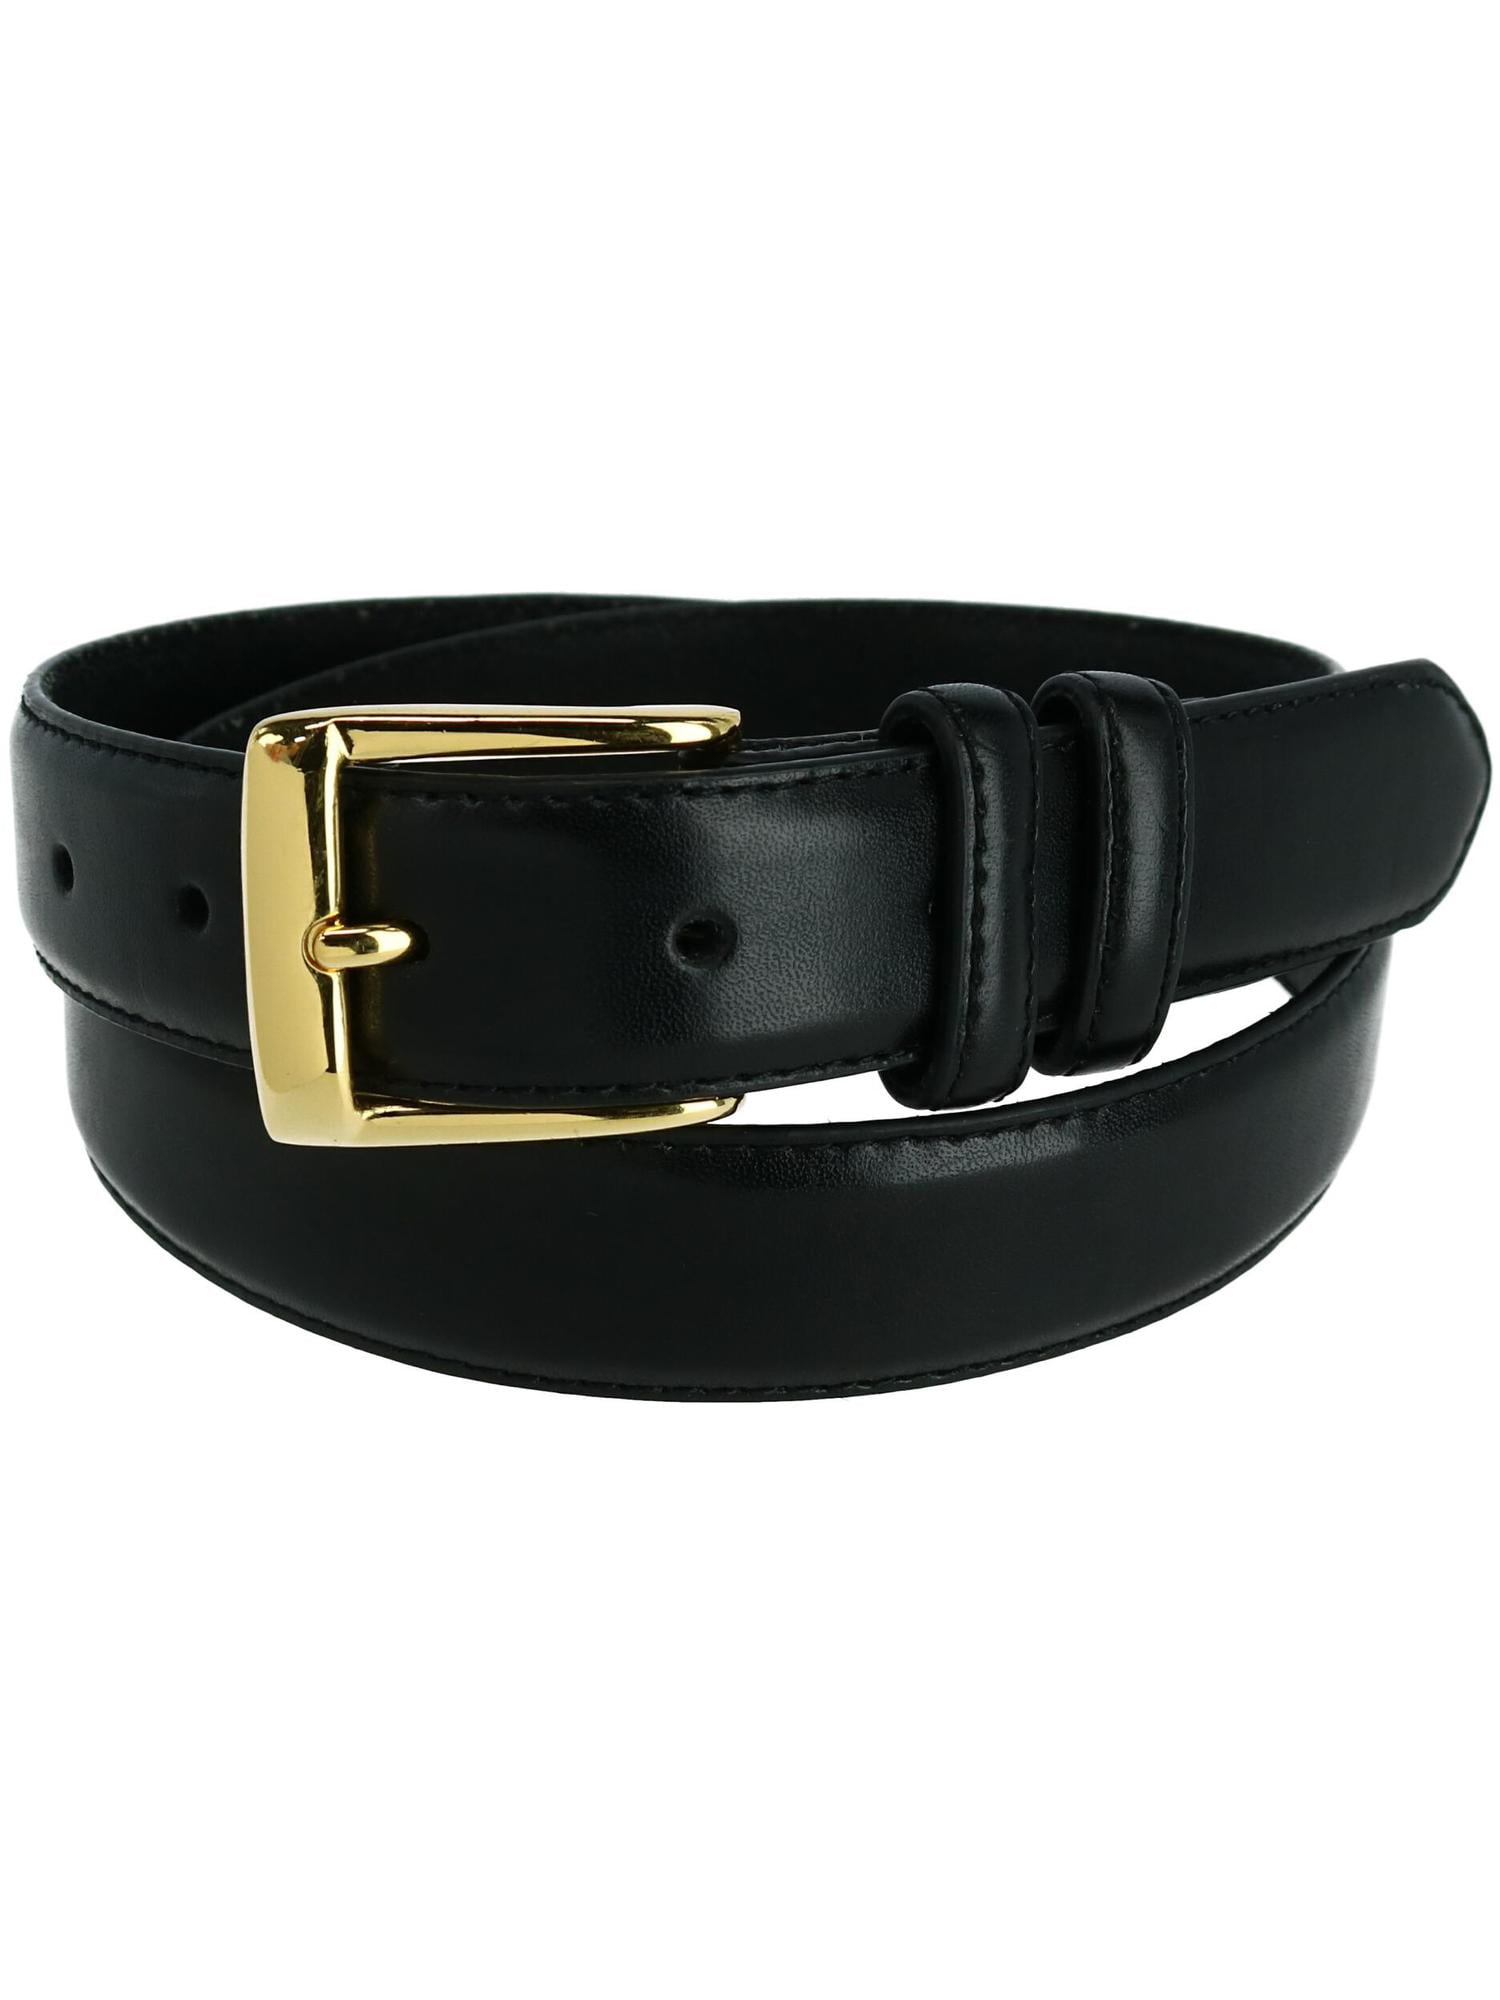 Mistoufle Belt - Black